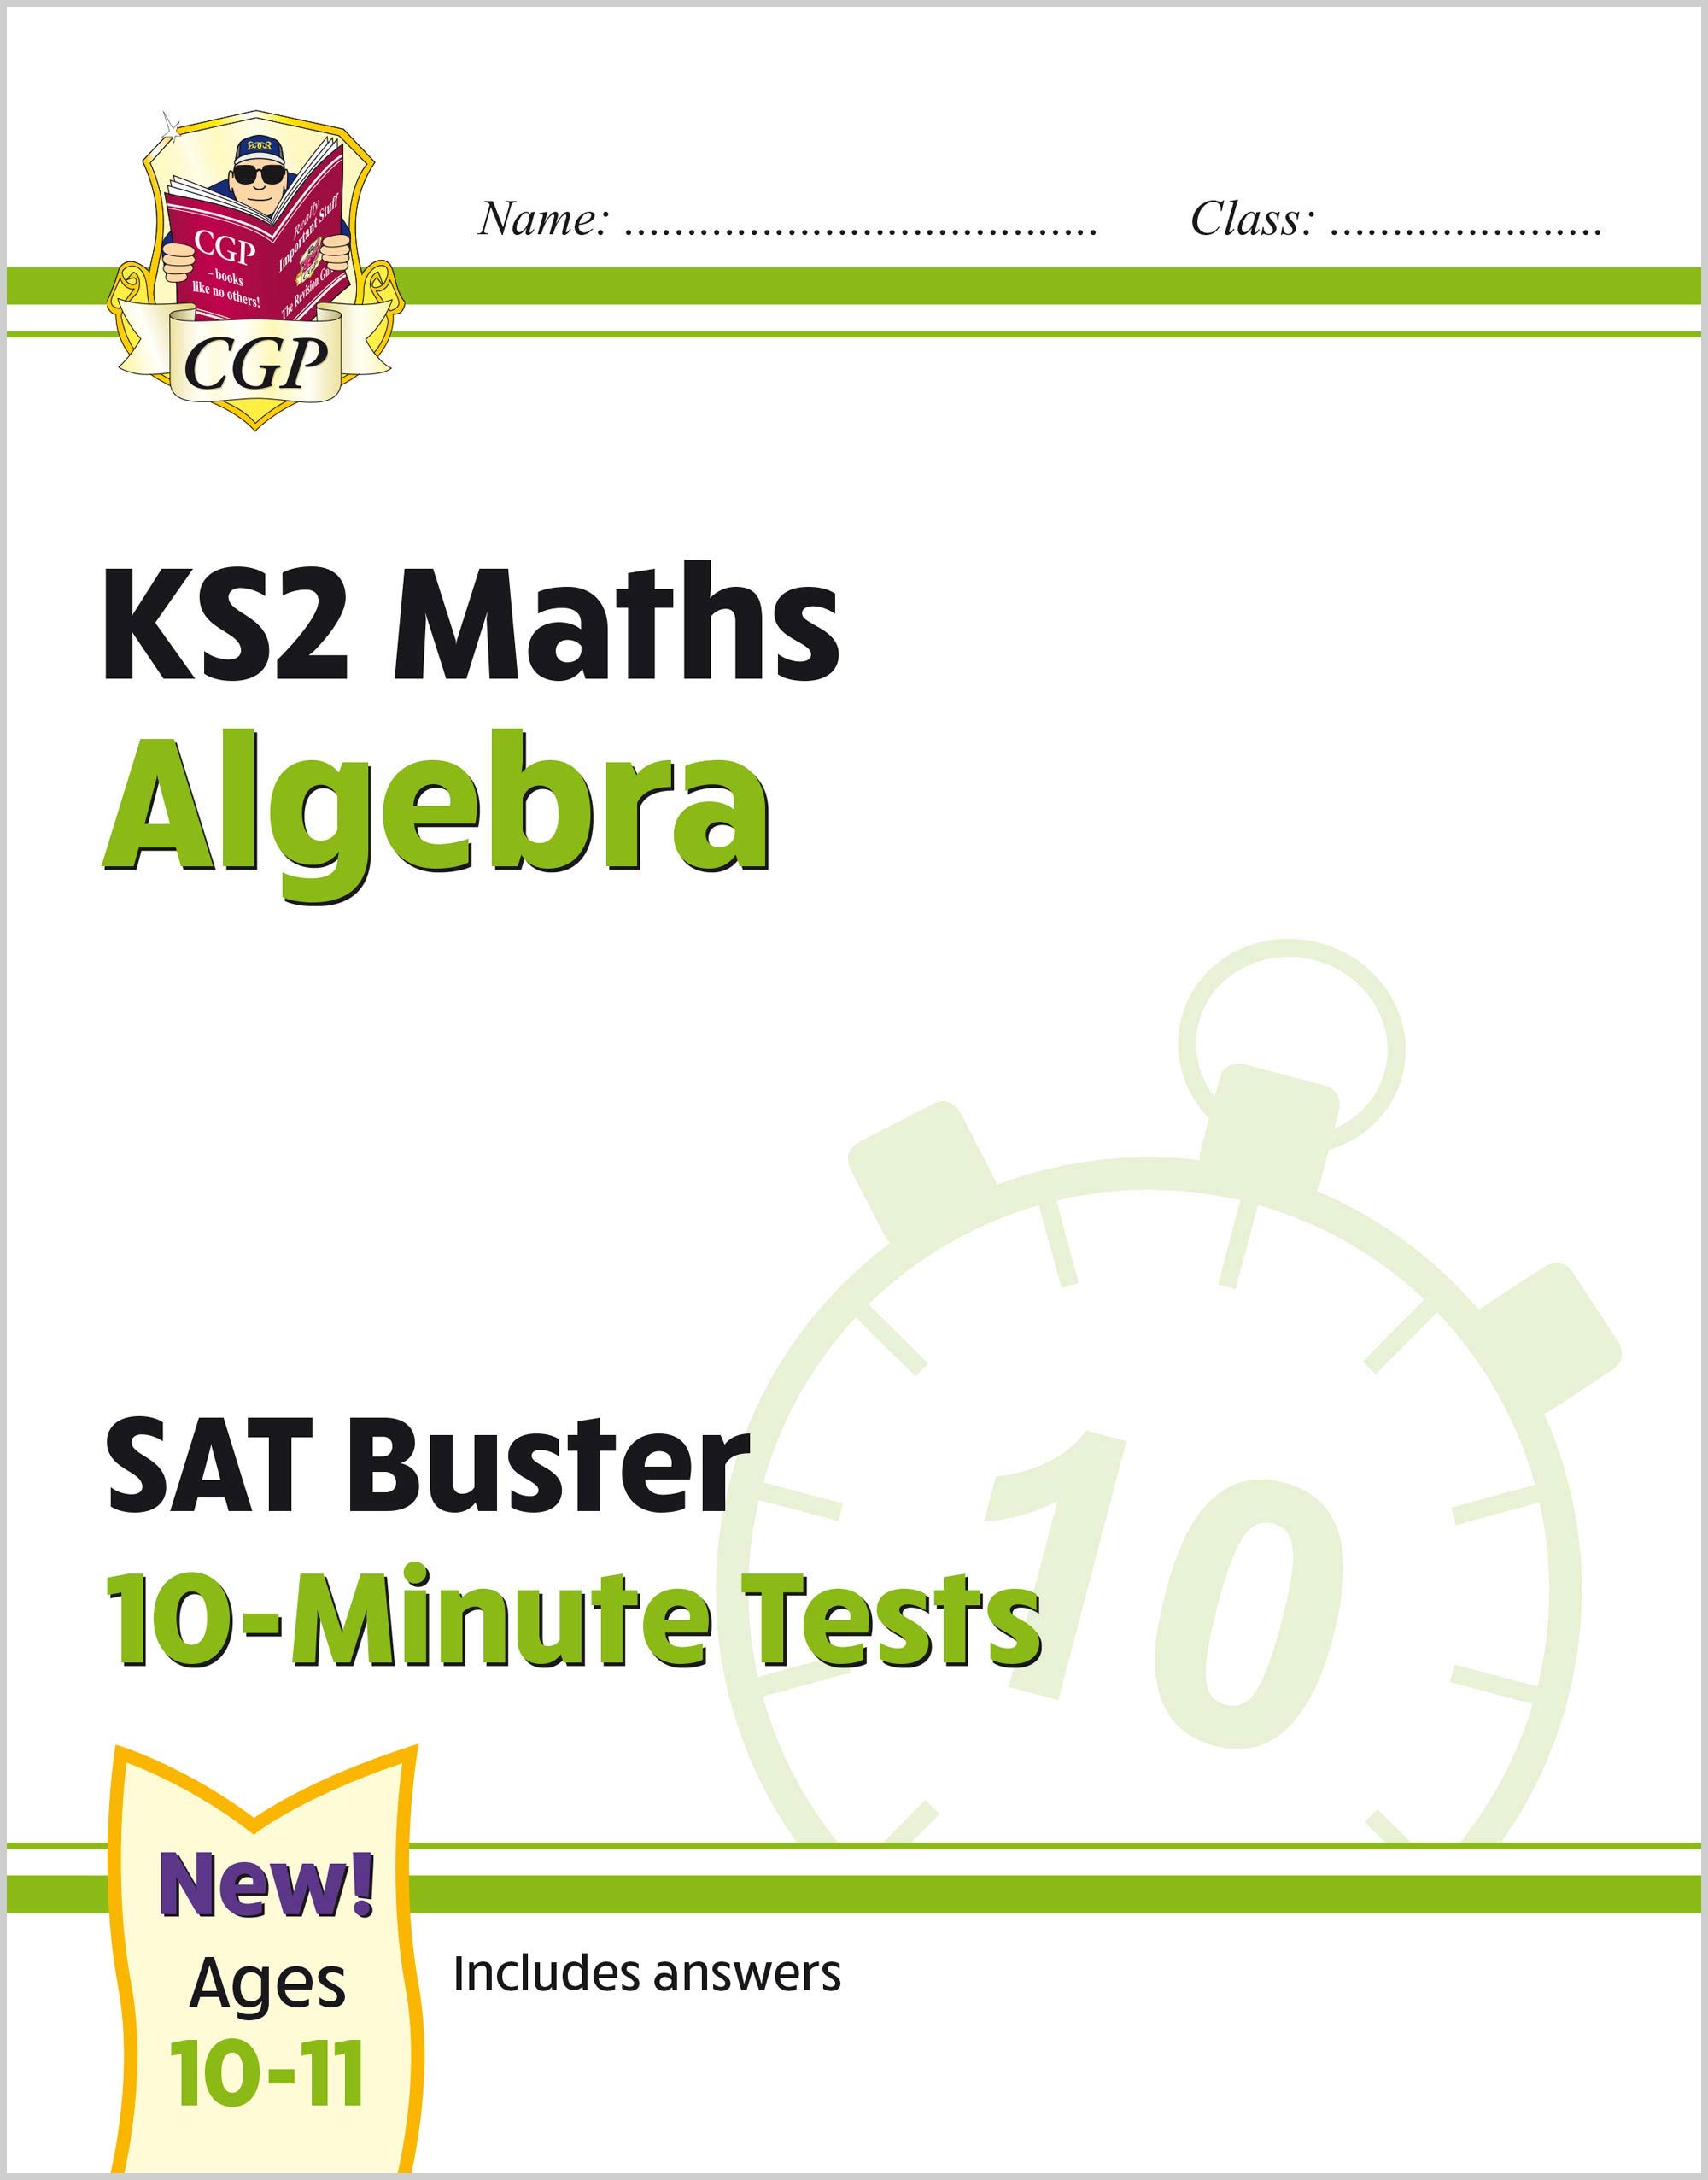 KS2 Maths SAT Buster 10-Minute Tests - Algebra